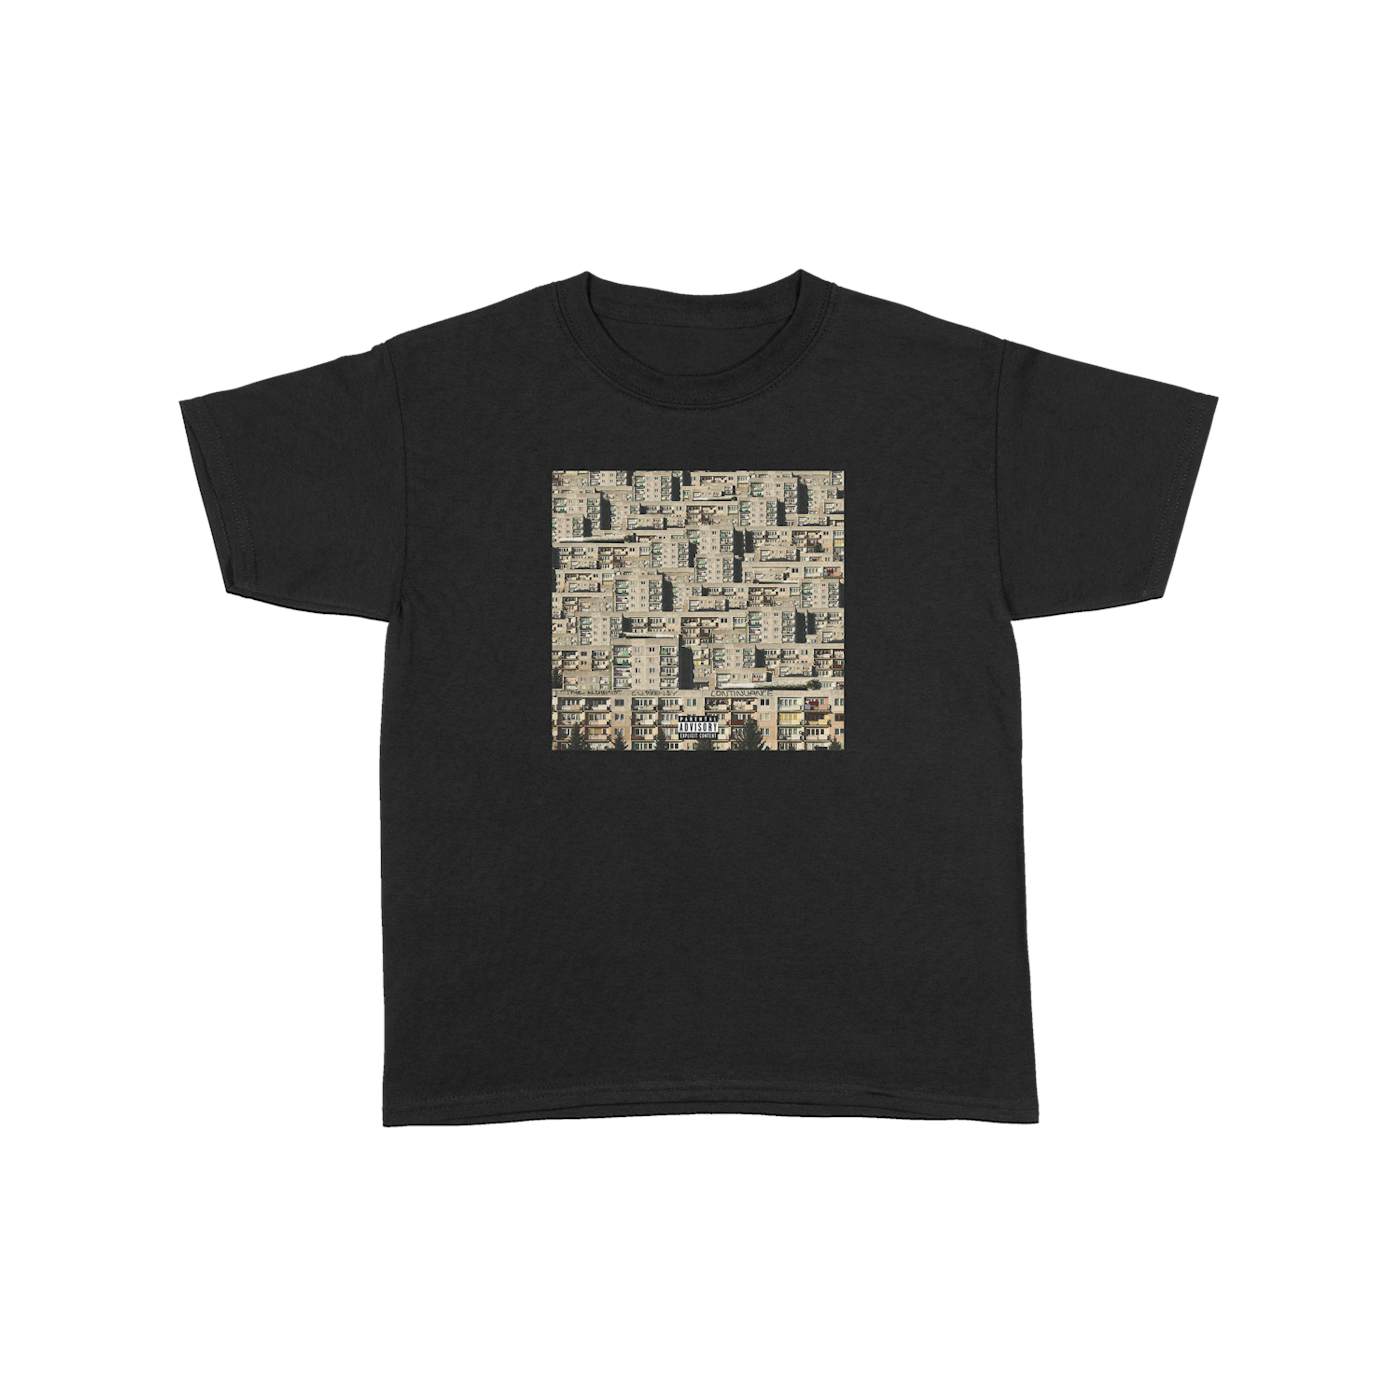 Curren$y & The Alchemist - Continuance T-Shirt